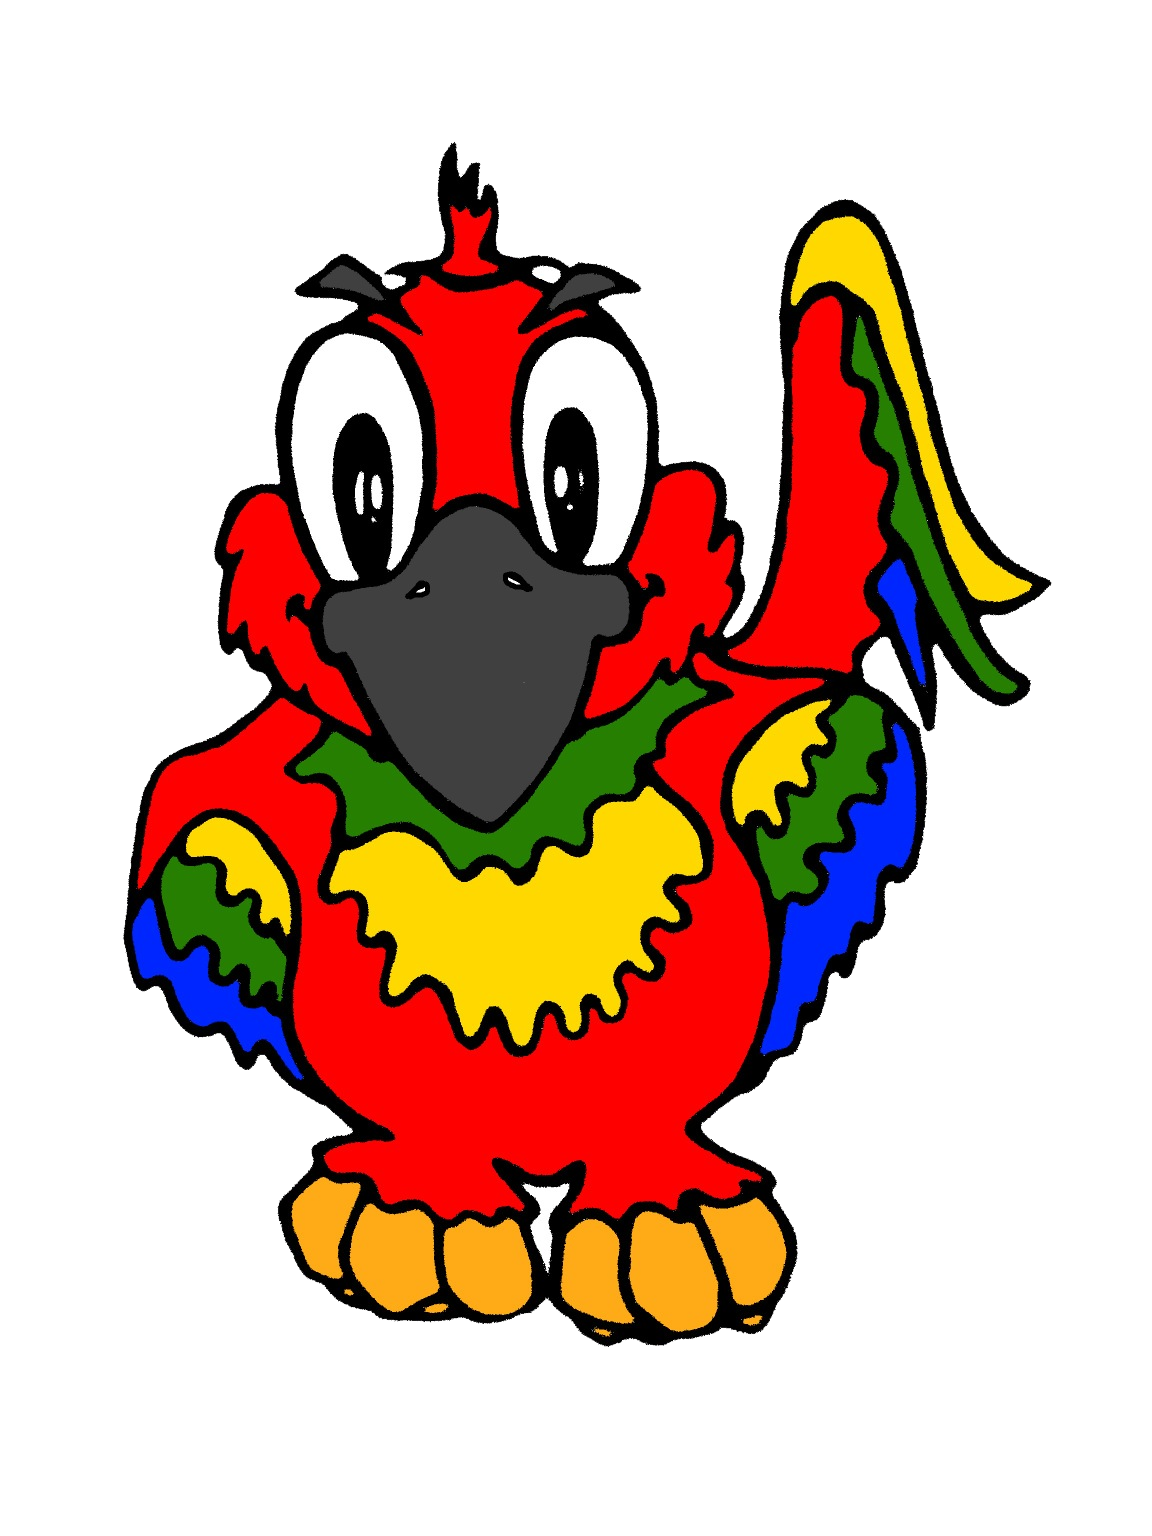 Sevimli papağan PNG şeffaf görüntü